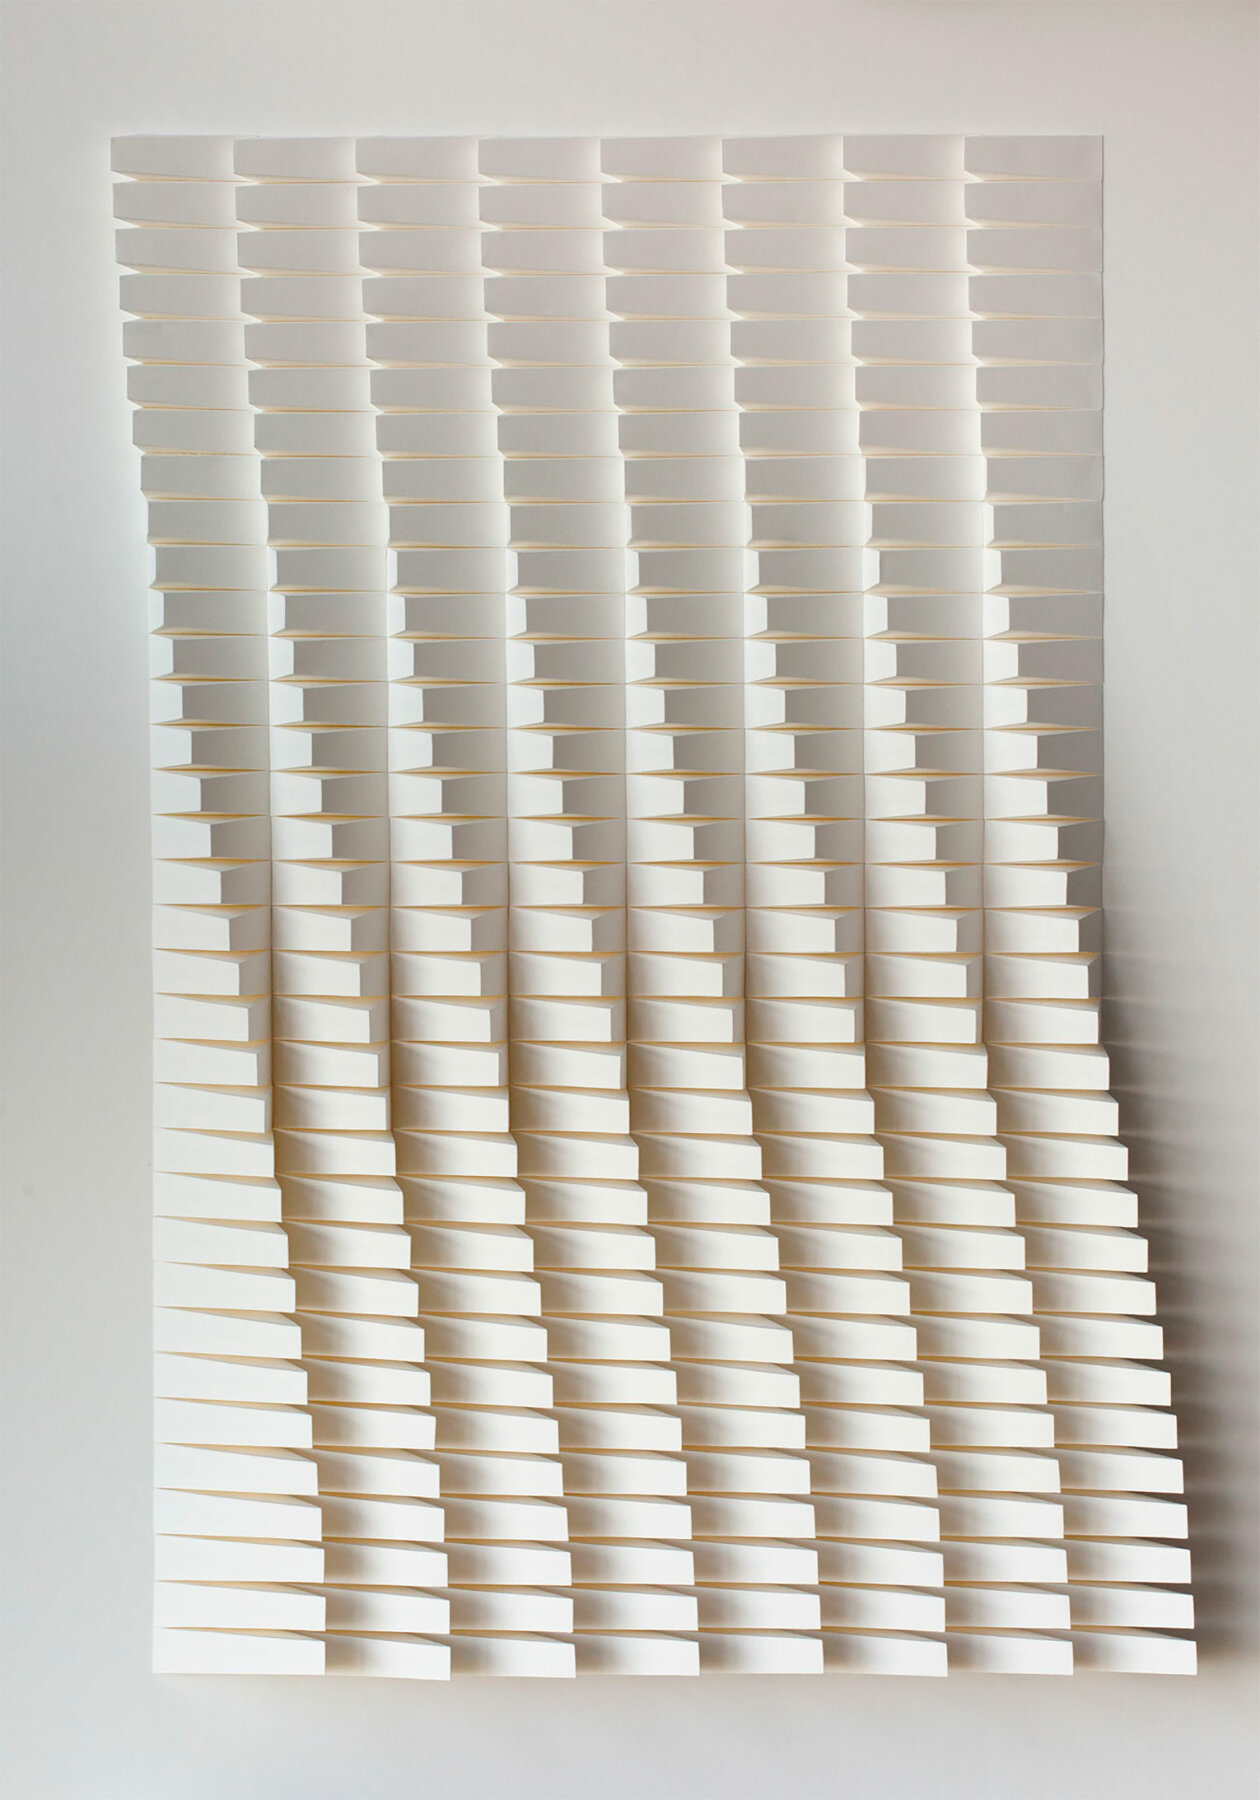 Origami Inspired Geometric Paper Sculptures By Anna Kruhelska (9)